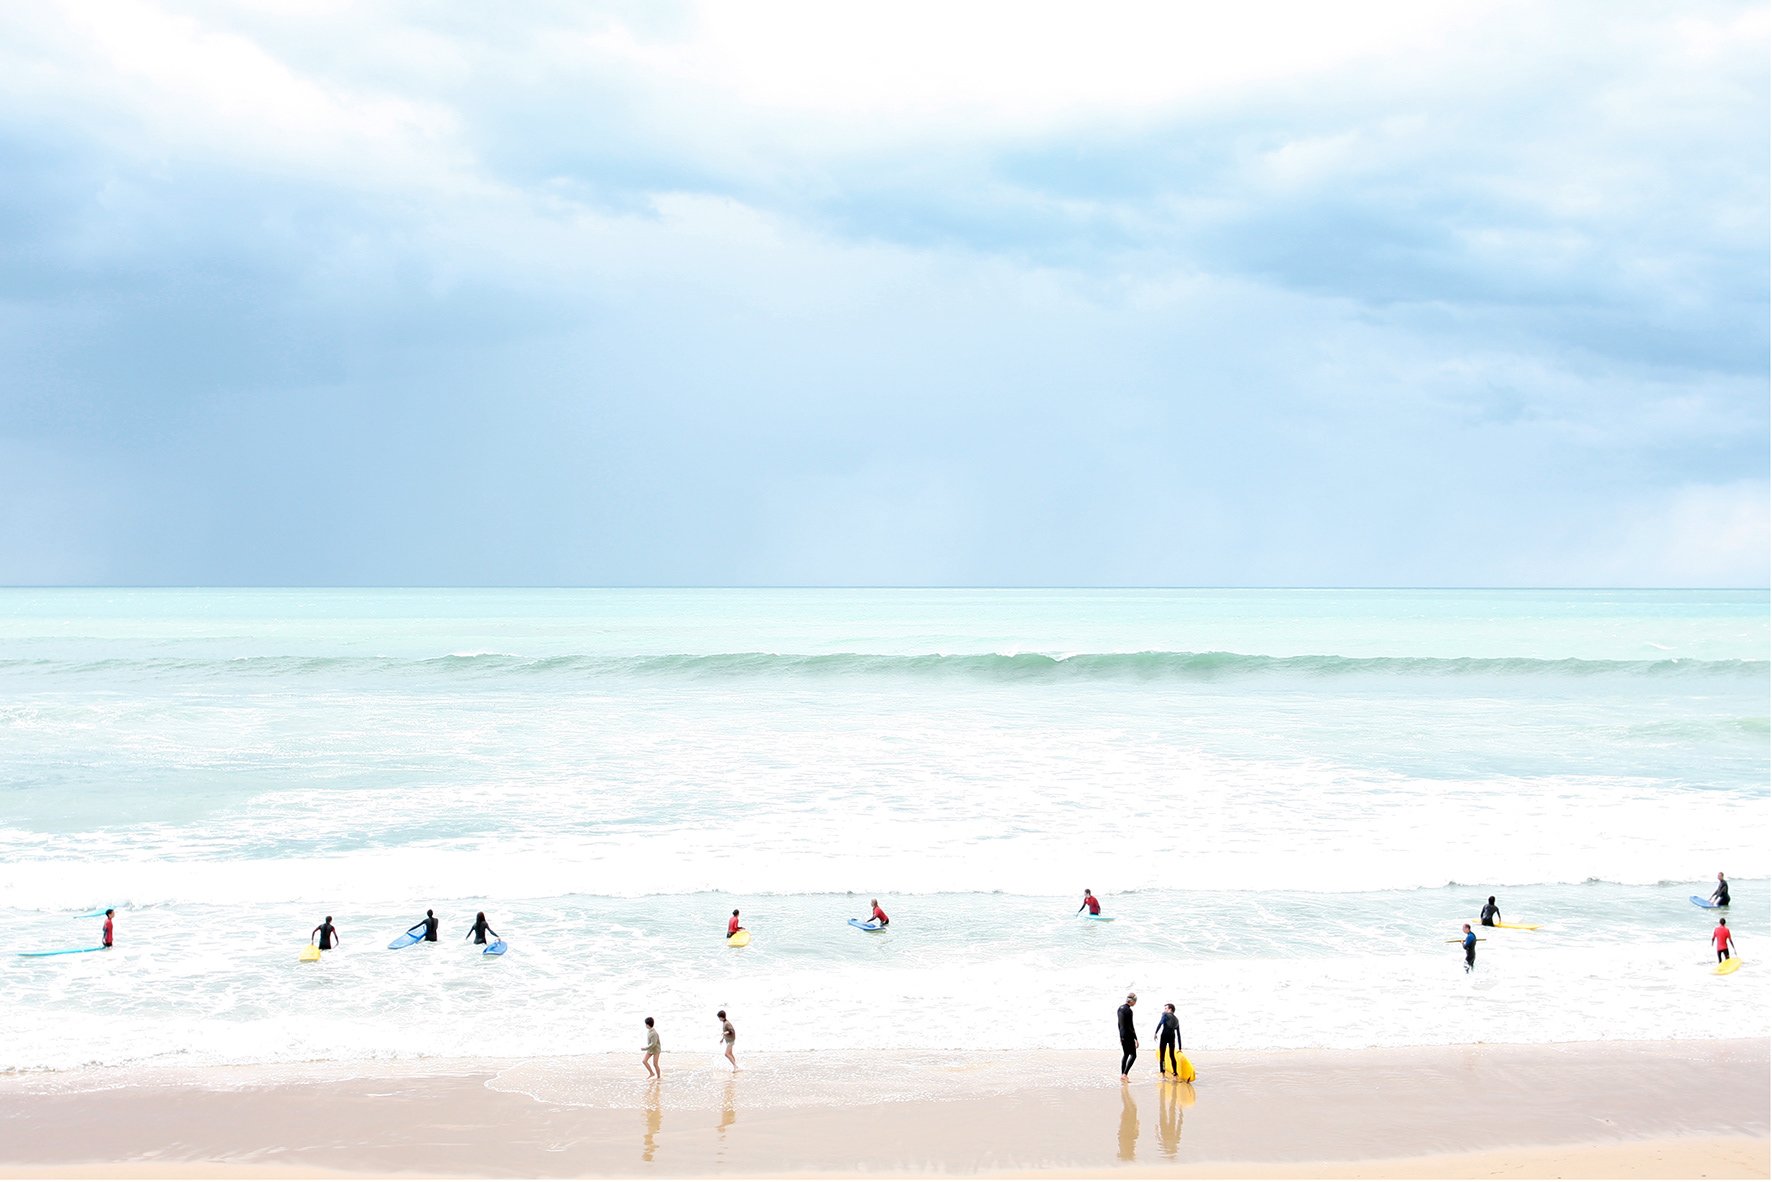 Mario Daniele Transforms Beach Scenes Into a Painterly Surf Series